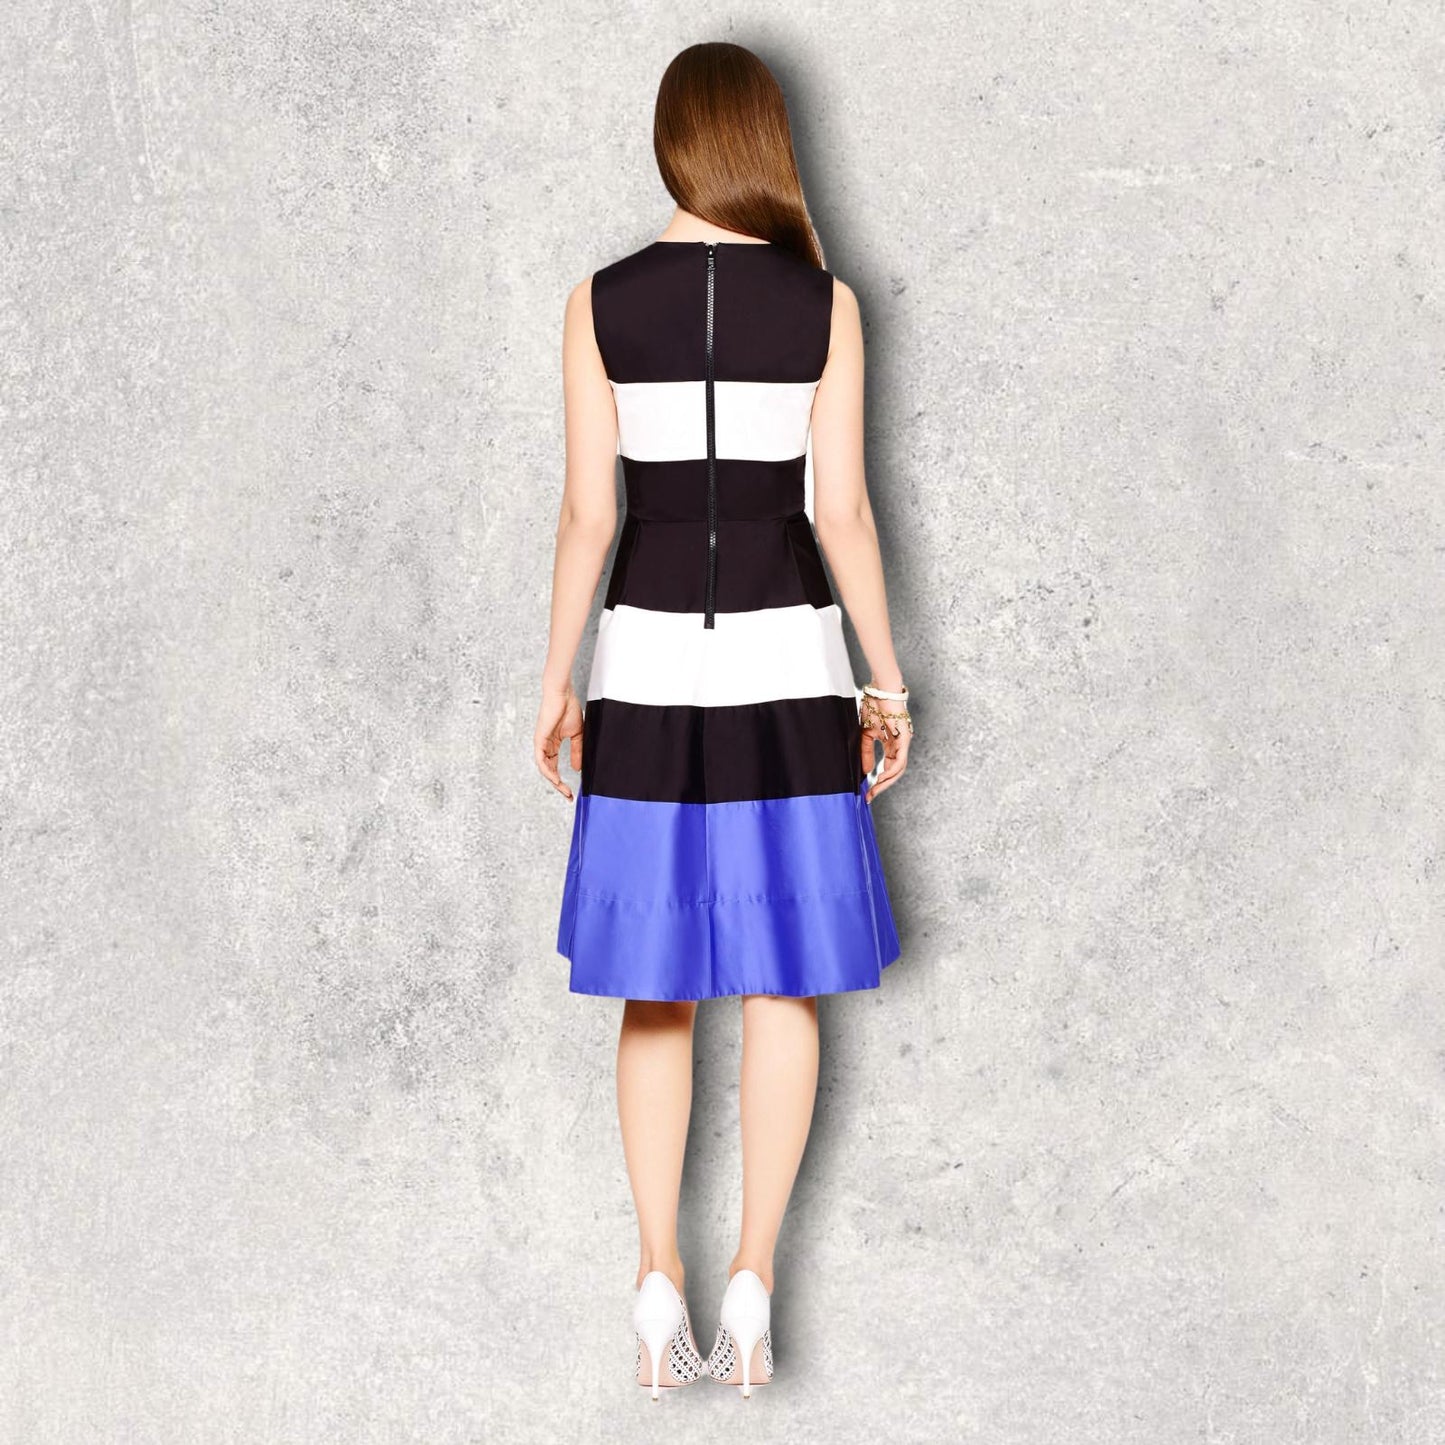 Kate Spade Corley Black White Blue Colour Block Dress UK 10 US 6 EU 38 BNWT Timeless Fashions